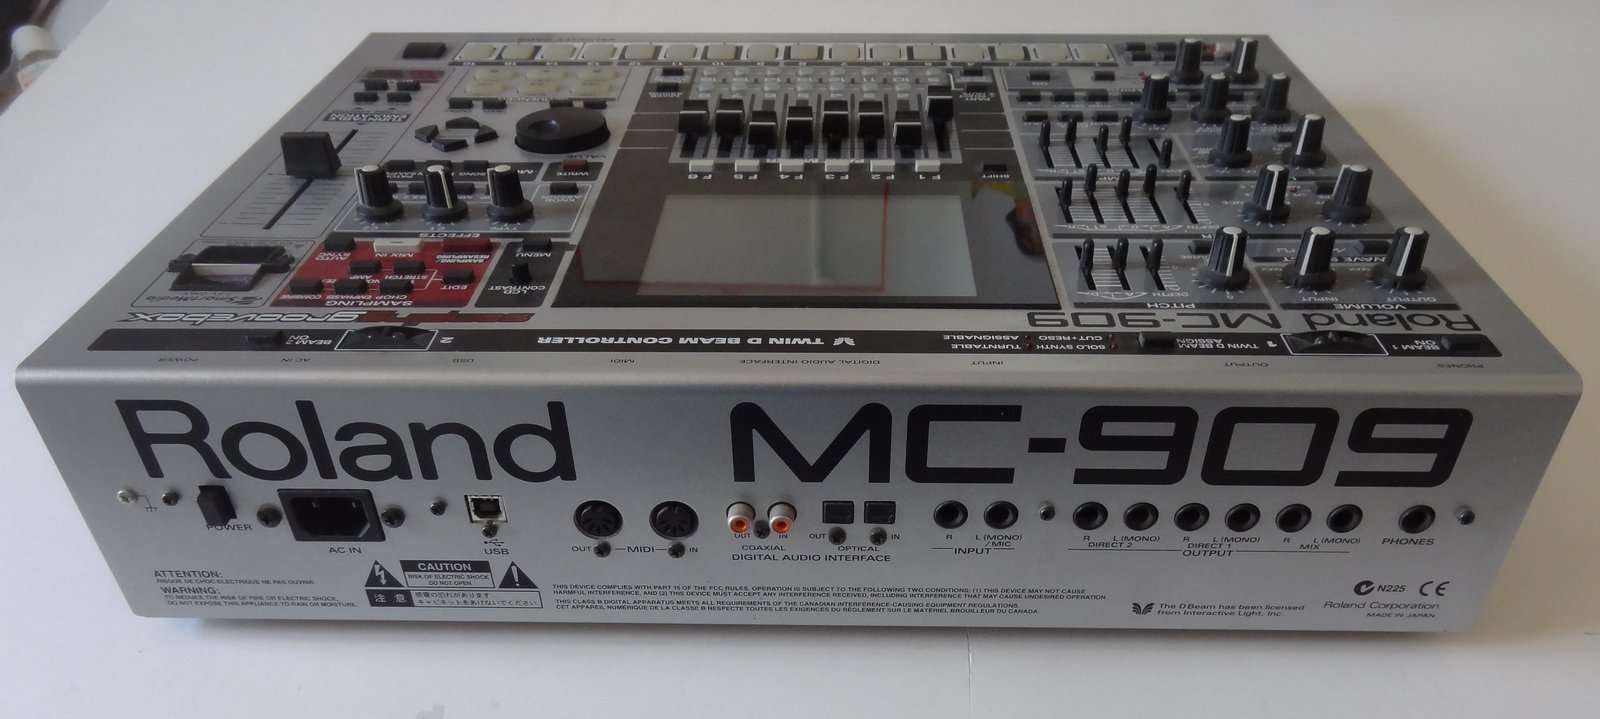 MC-909 Sampling Groovebox - Roland MC-909 Sampling Groovebox 